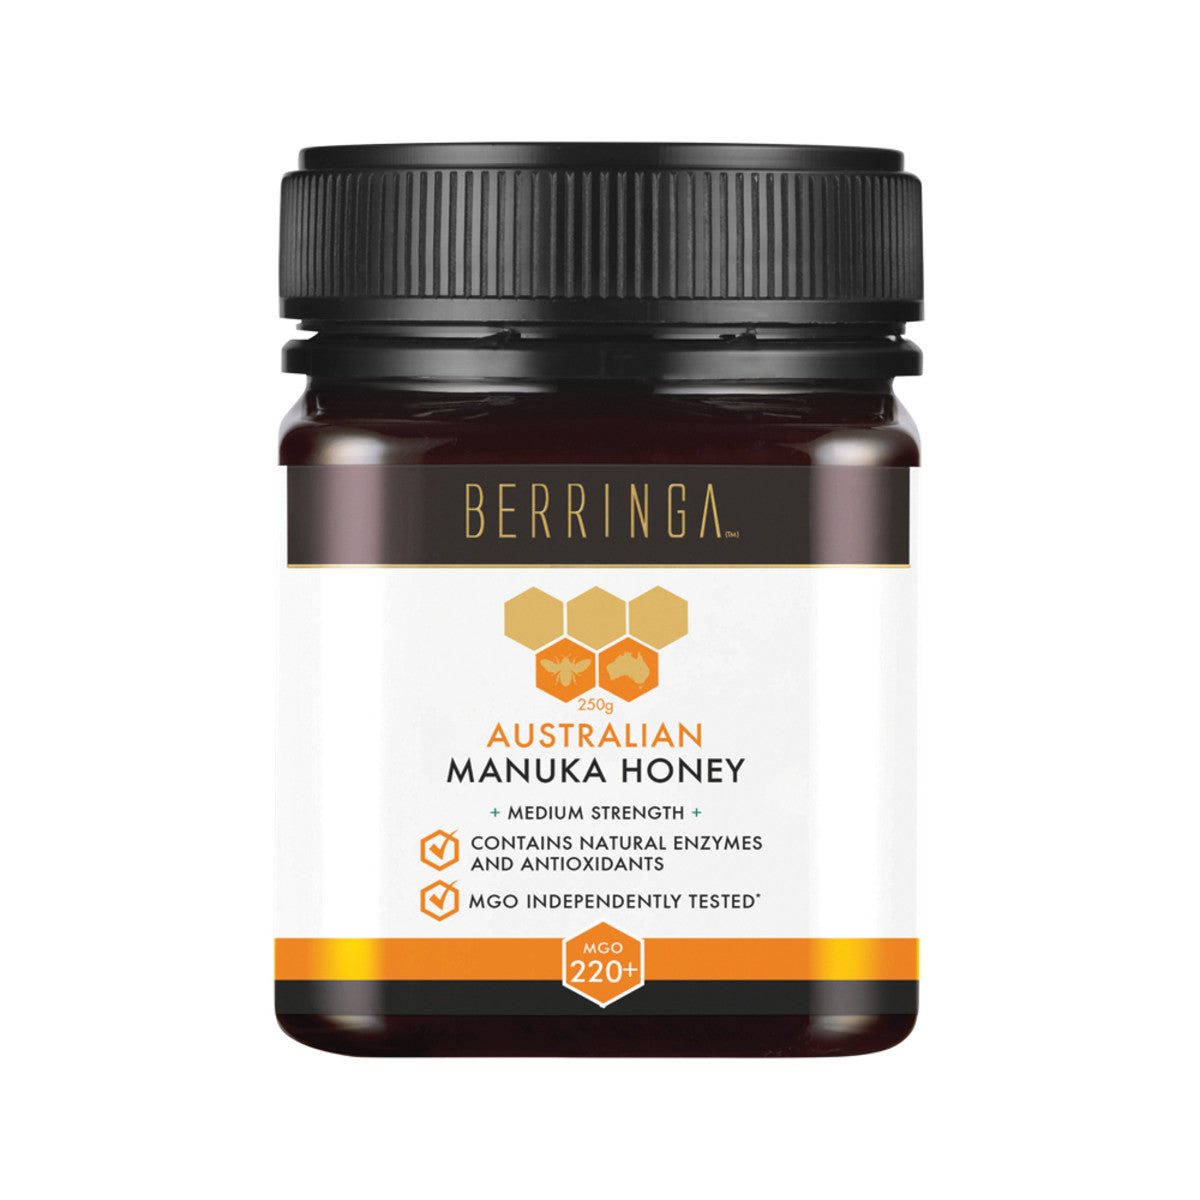 Berringa Australian Manuka Honey MGO 220+, 250g Or 500g Medium Strength